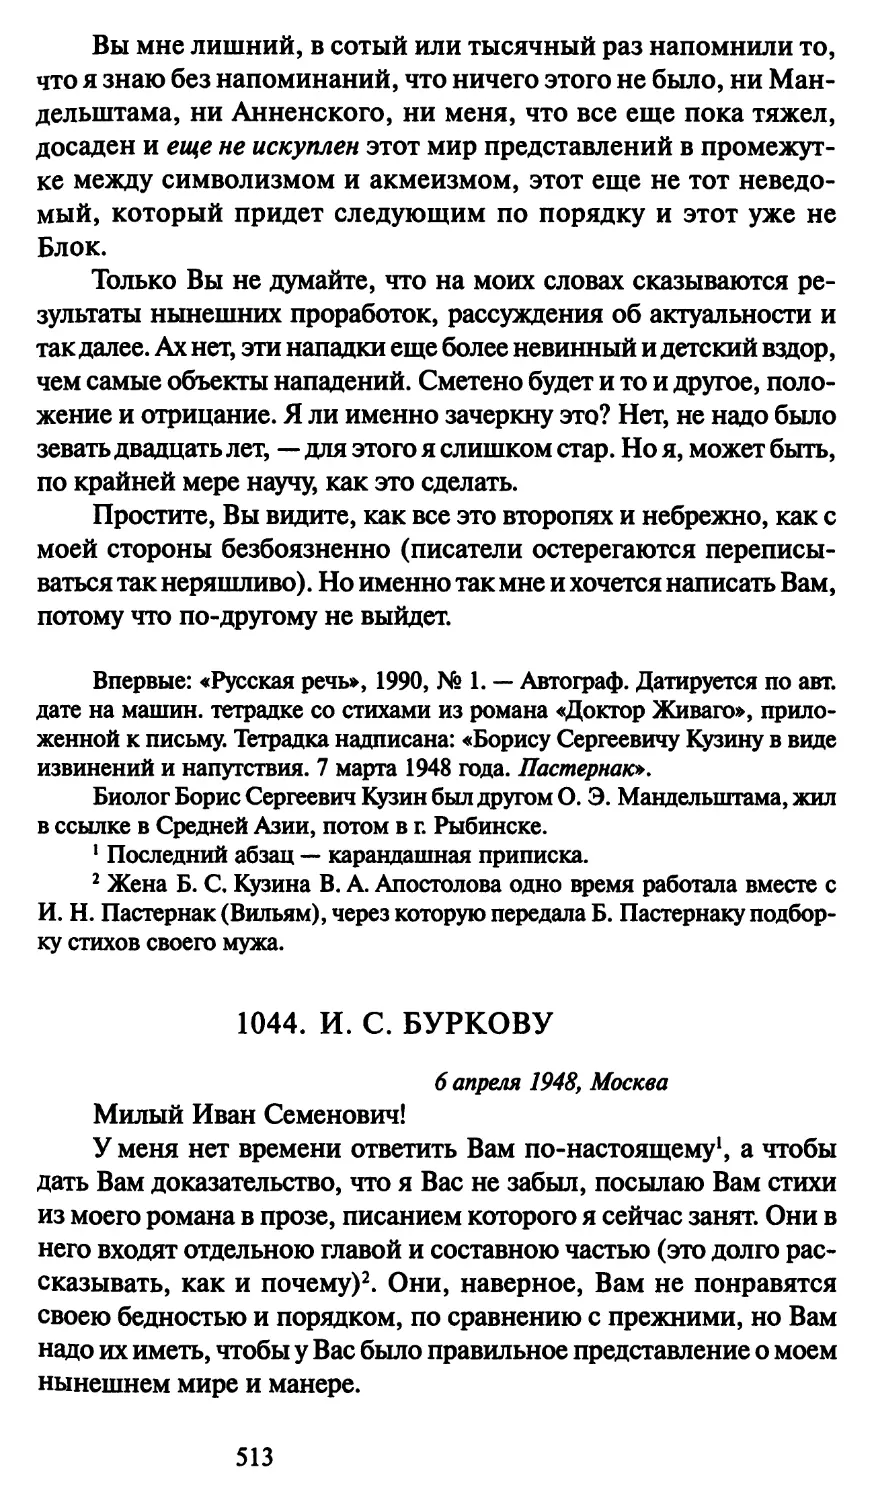 1044. И. С. Буркову 6 апреля 1948